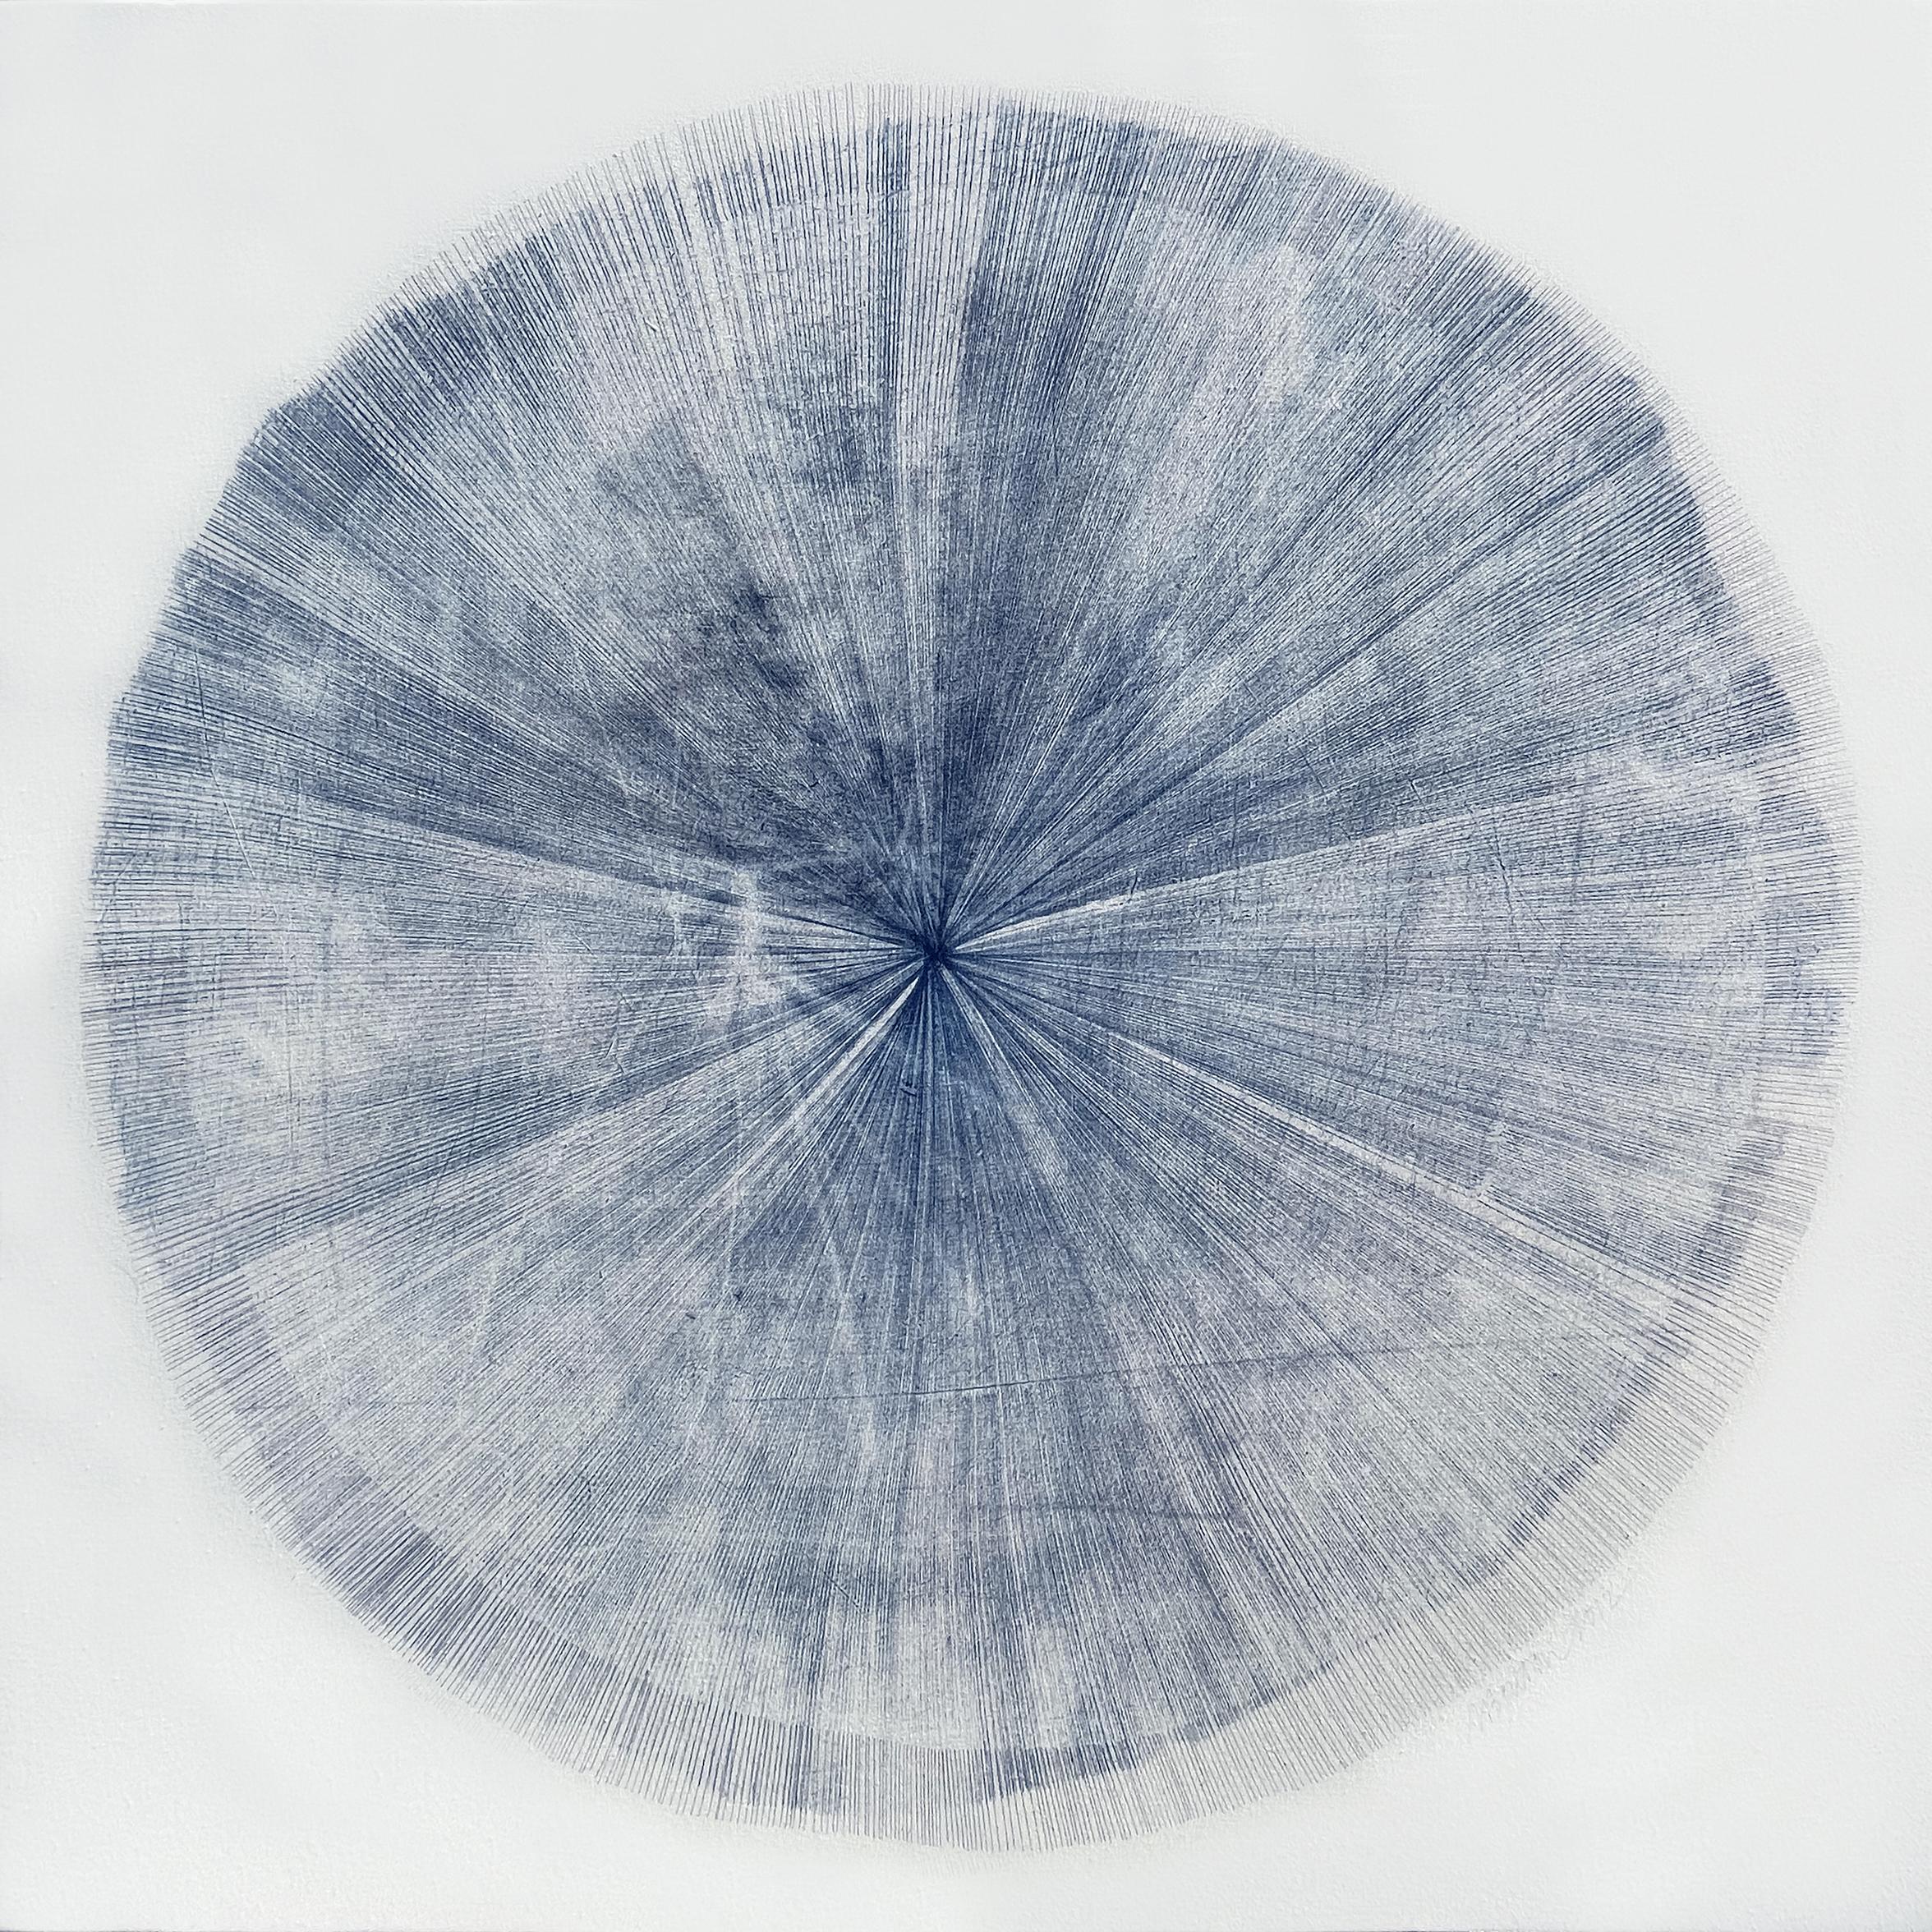 Agathe Bouton Abstract Painting - Burmese Days XXII: large indigo blue minimalist abstract circular form on white